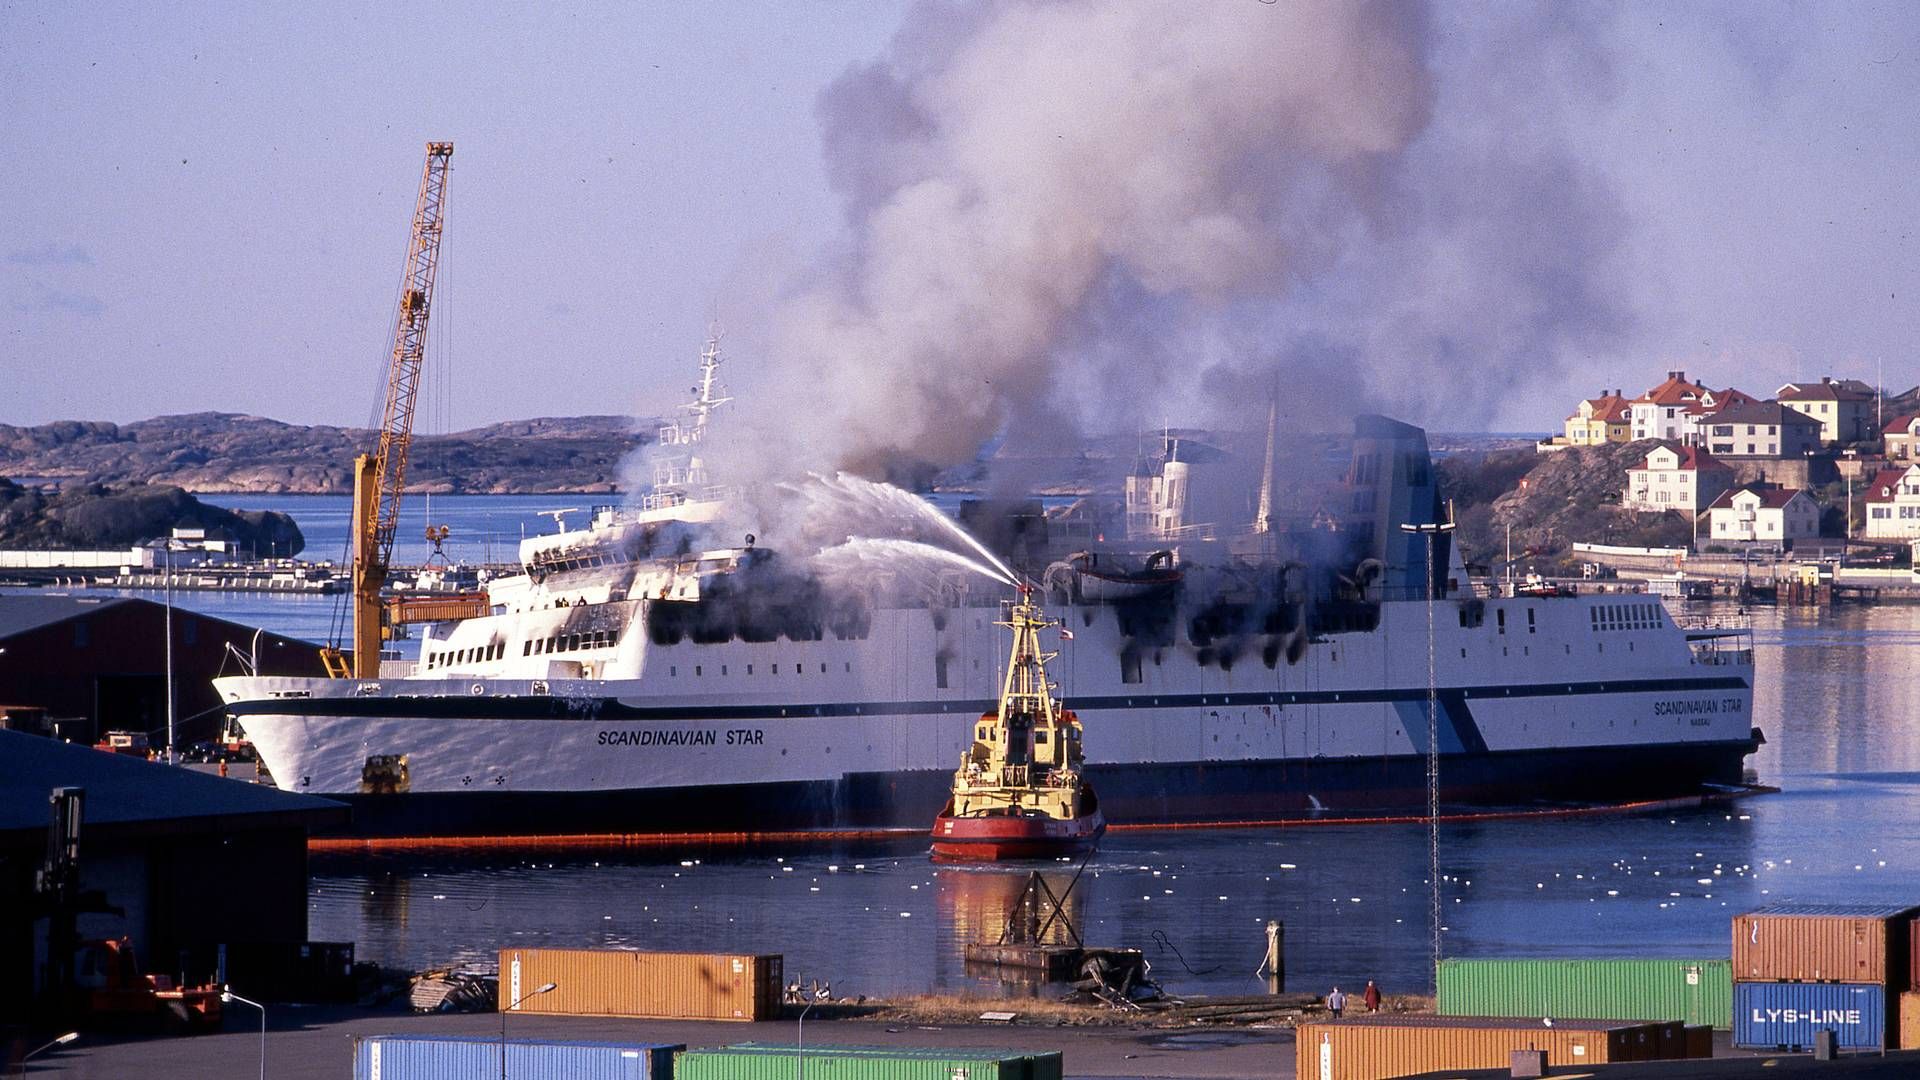 Branden på færgen "Scandinavian Star" kostede 158 mennesker livet. (ARKIV) | Foto: Carsten Ingemann